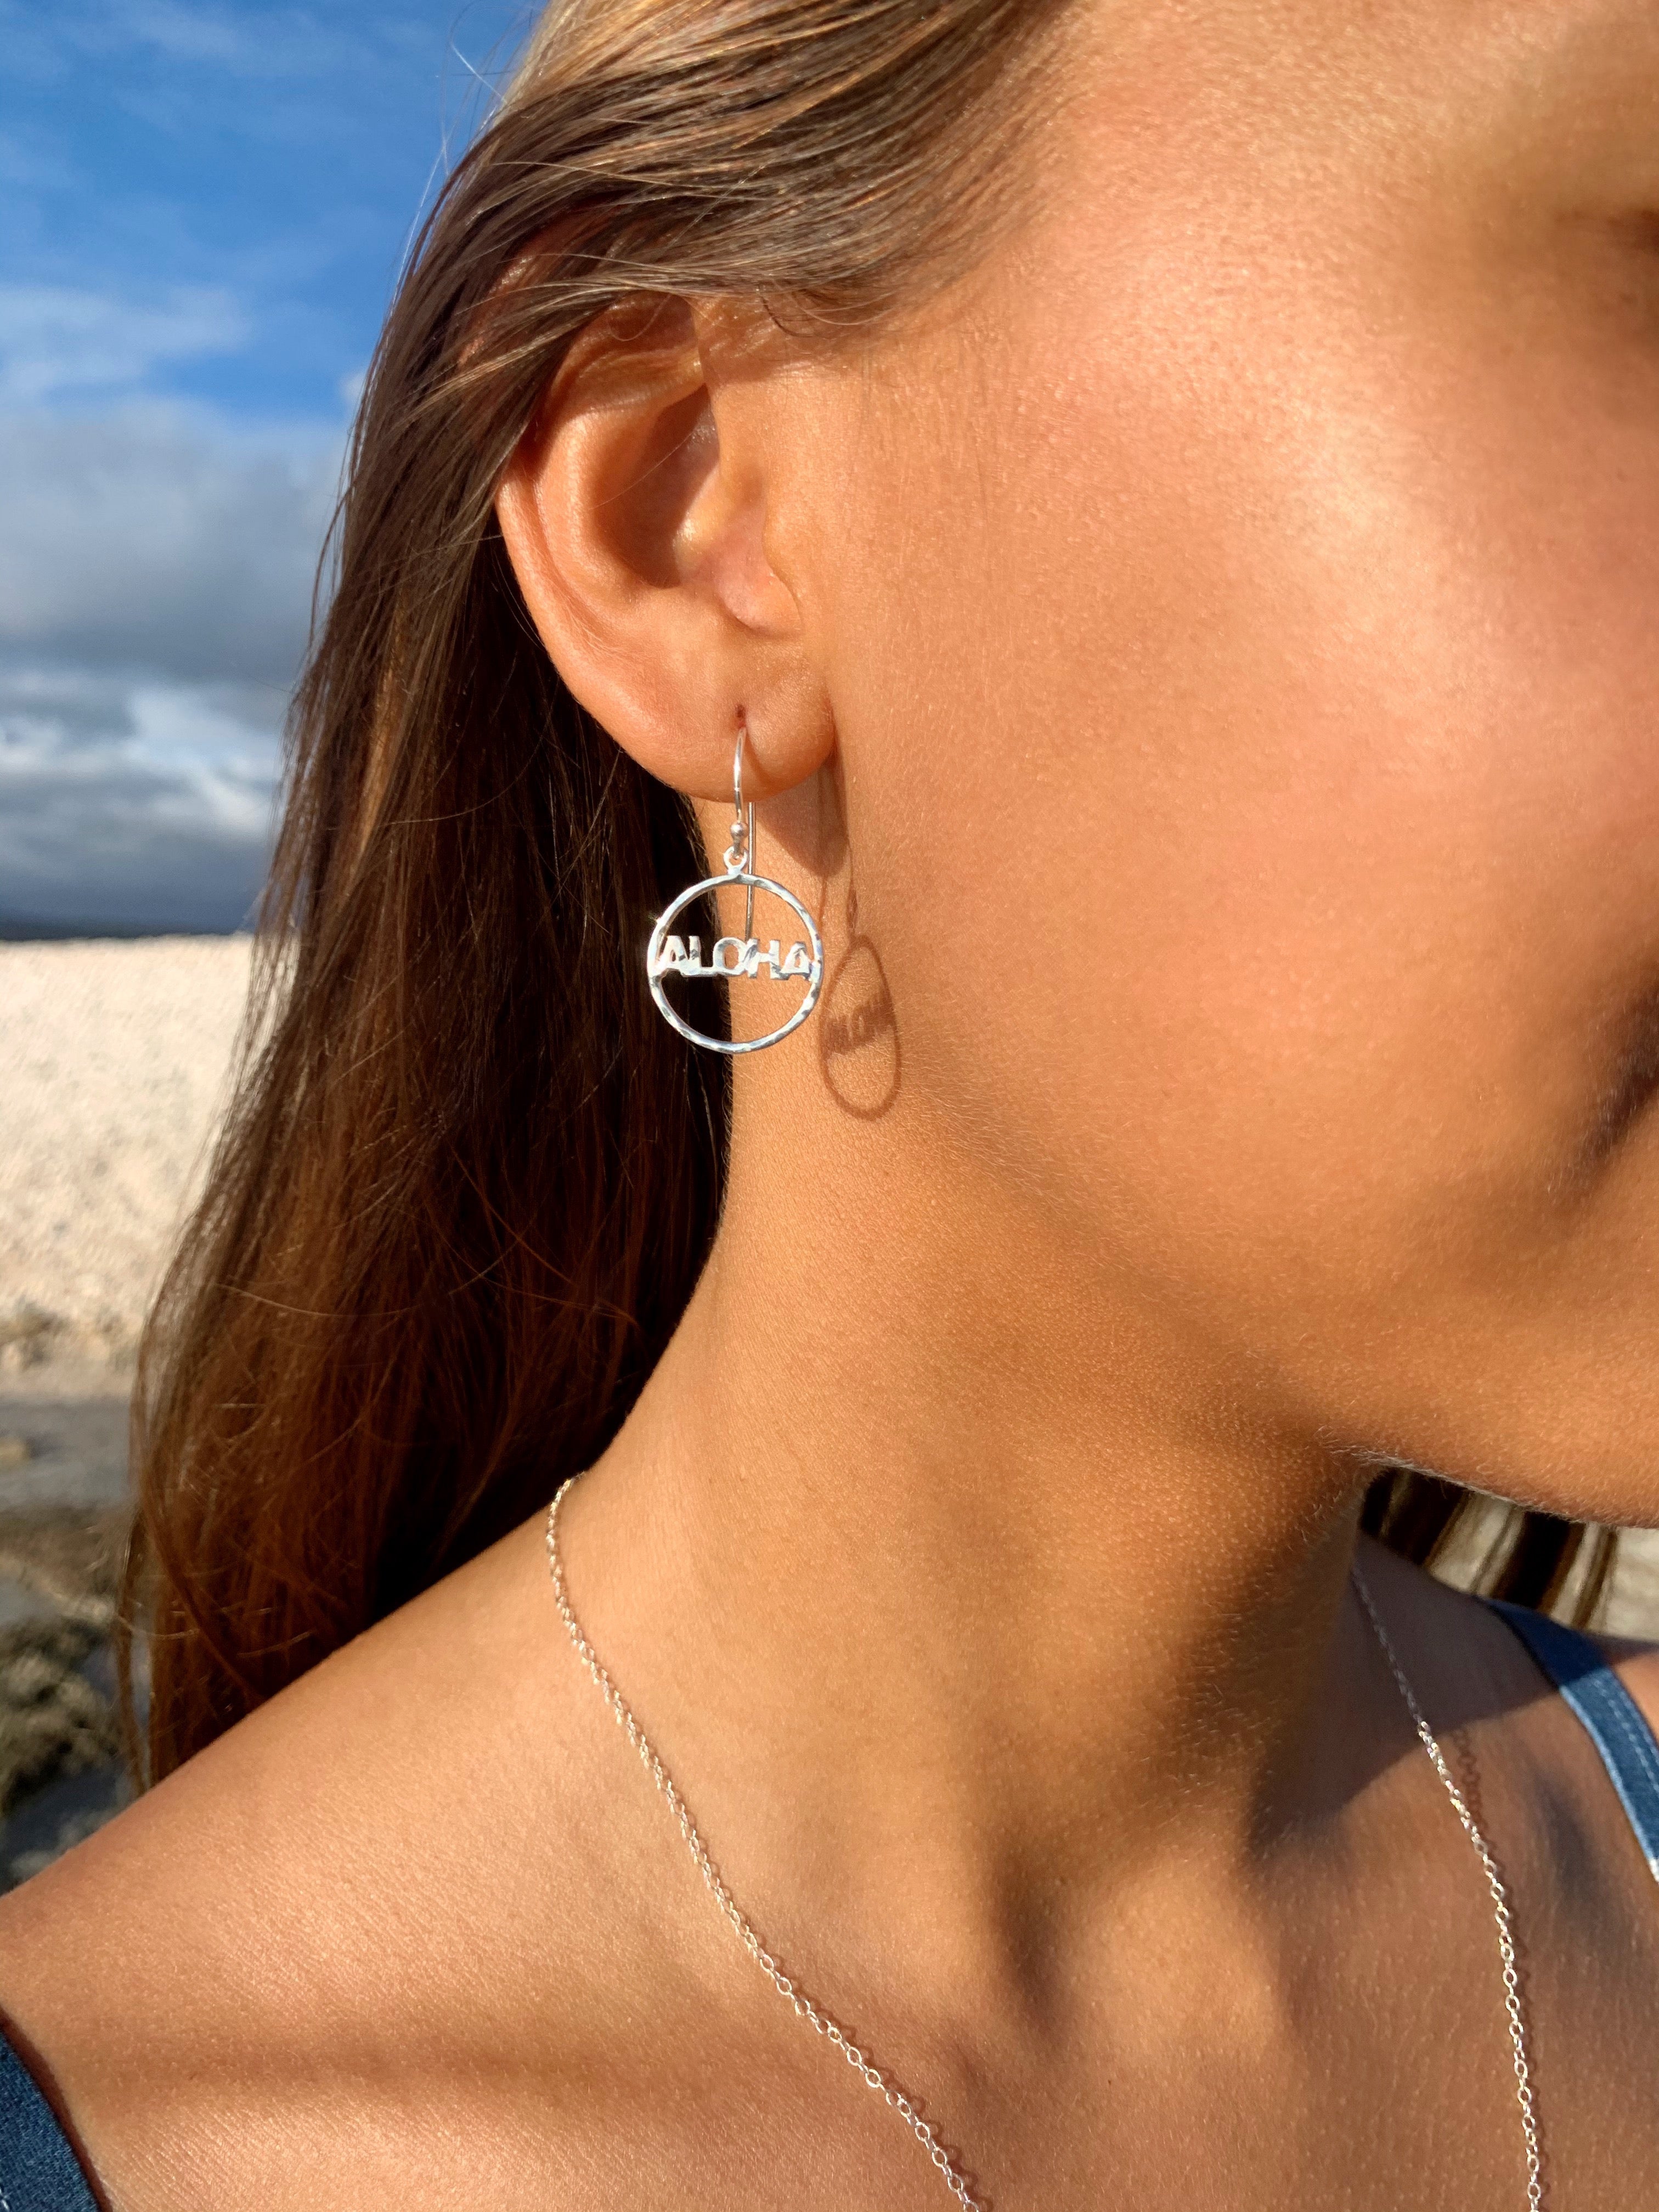 Aloha Petite hoop earrings